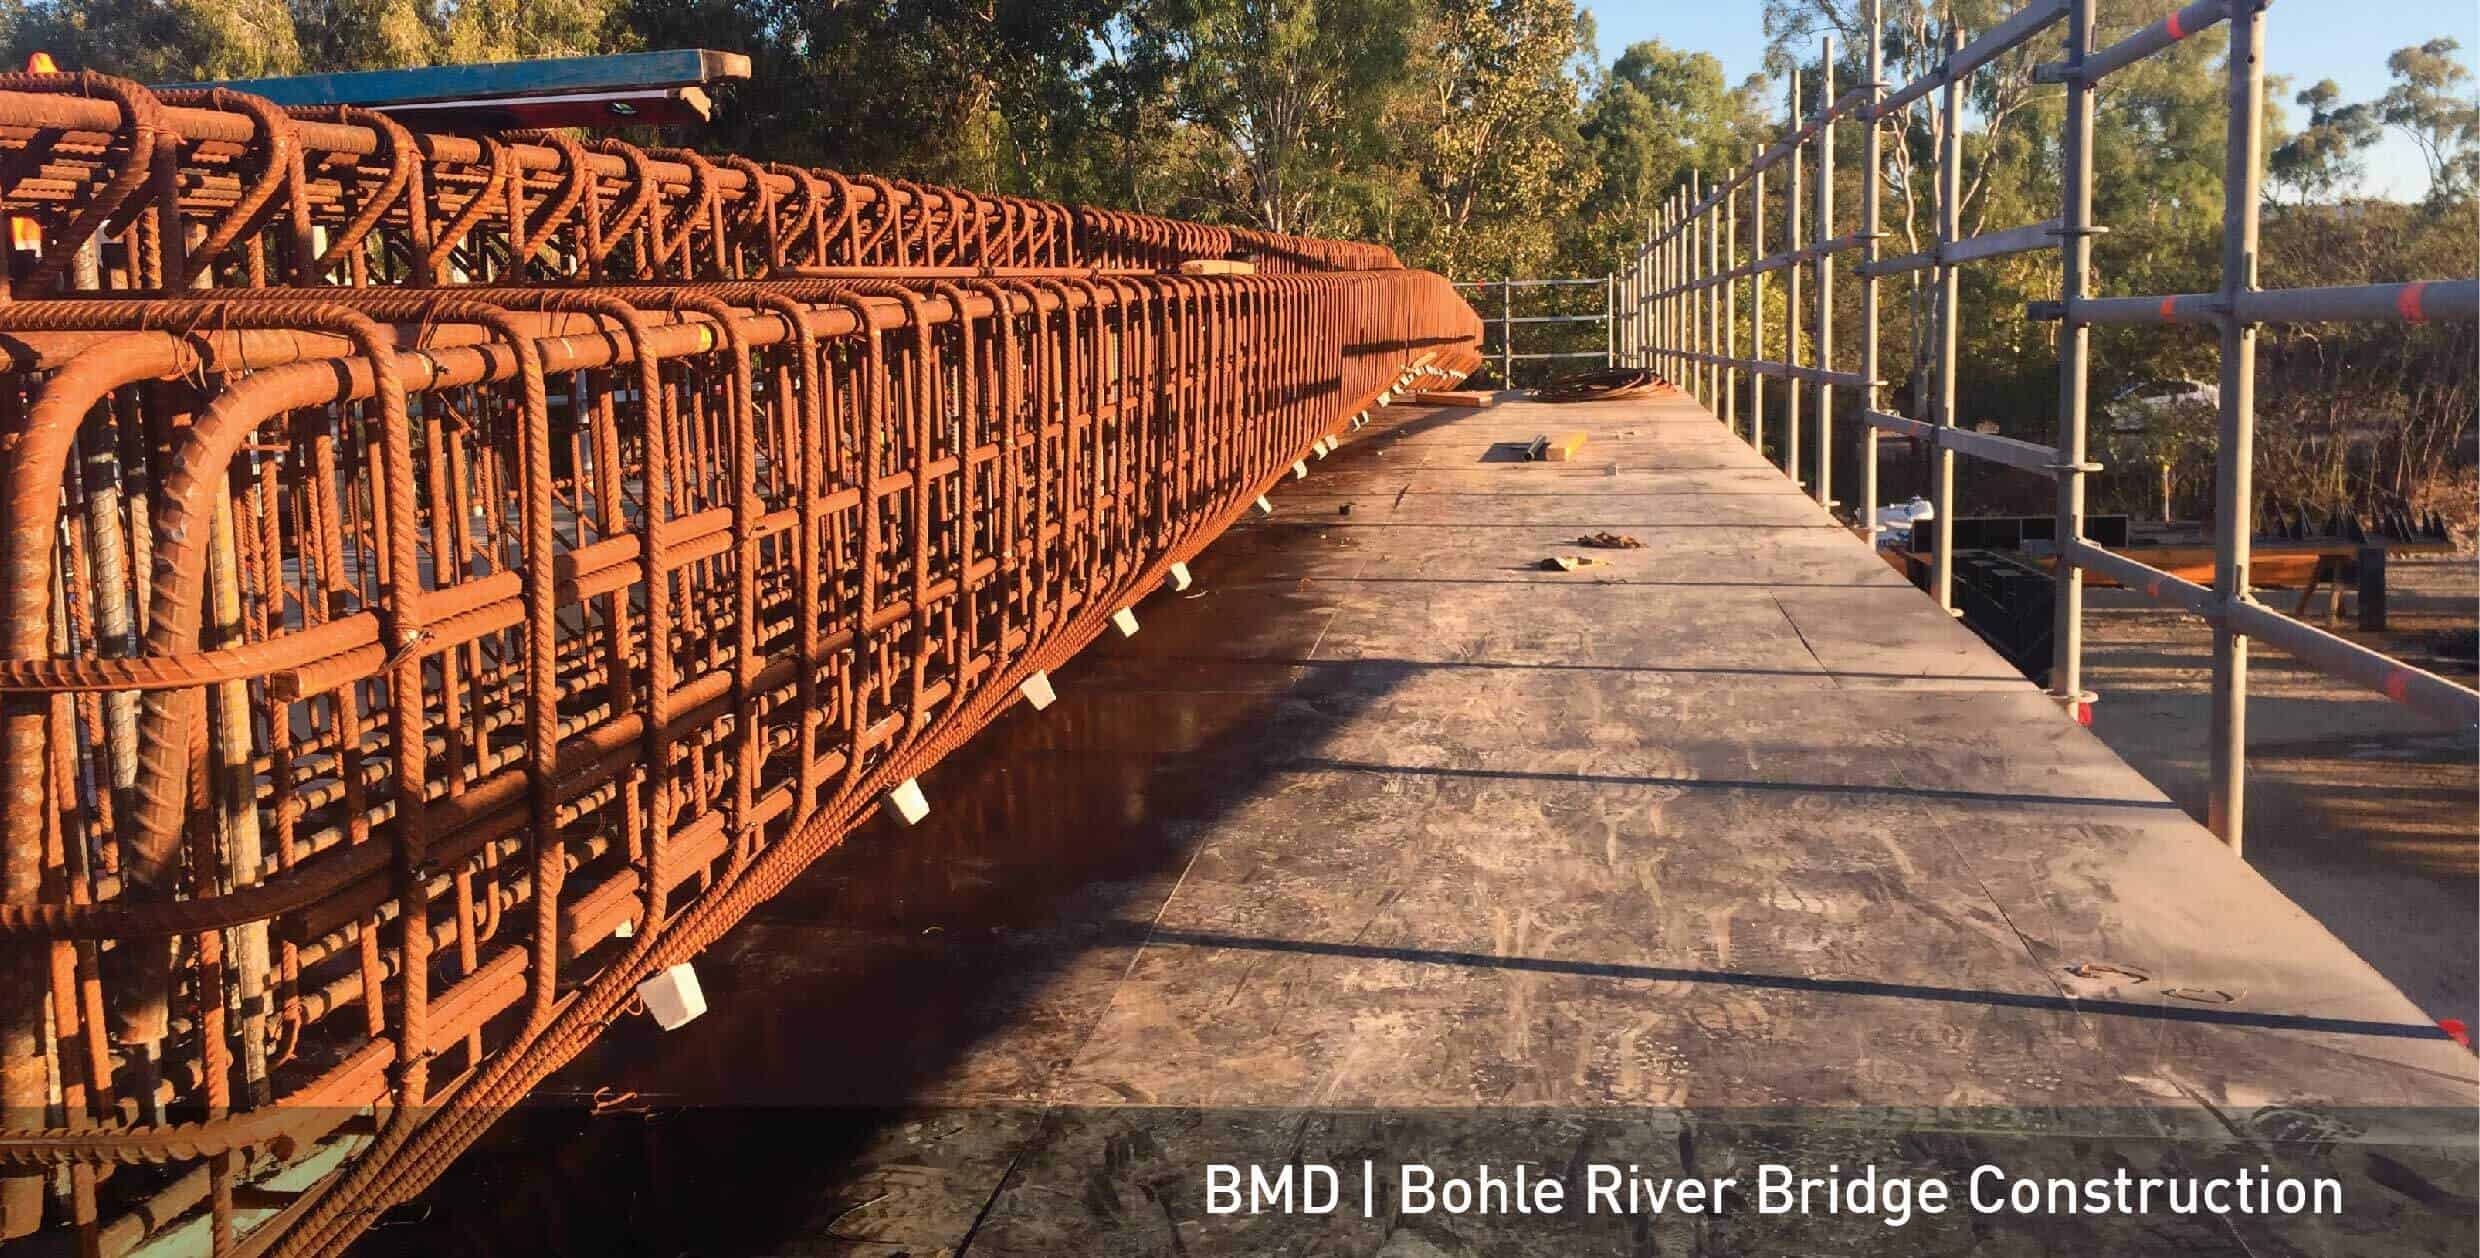 Bmd Bohle River Bridge 2